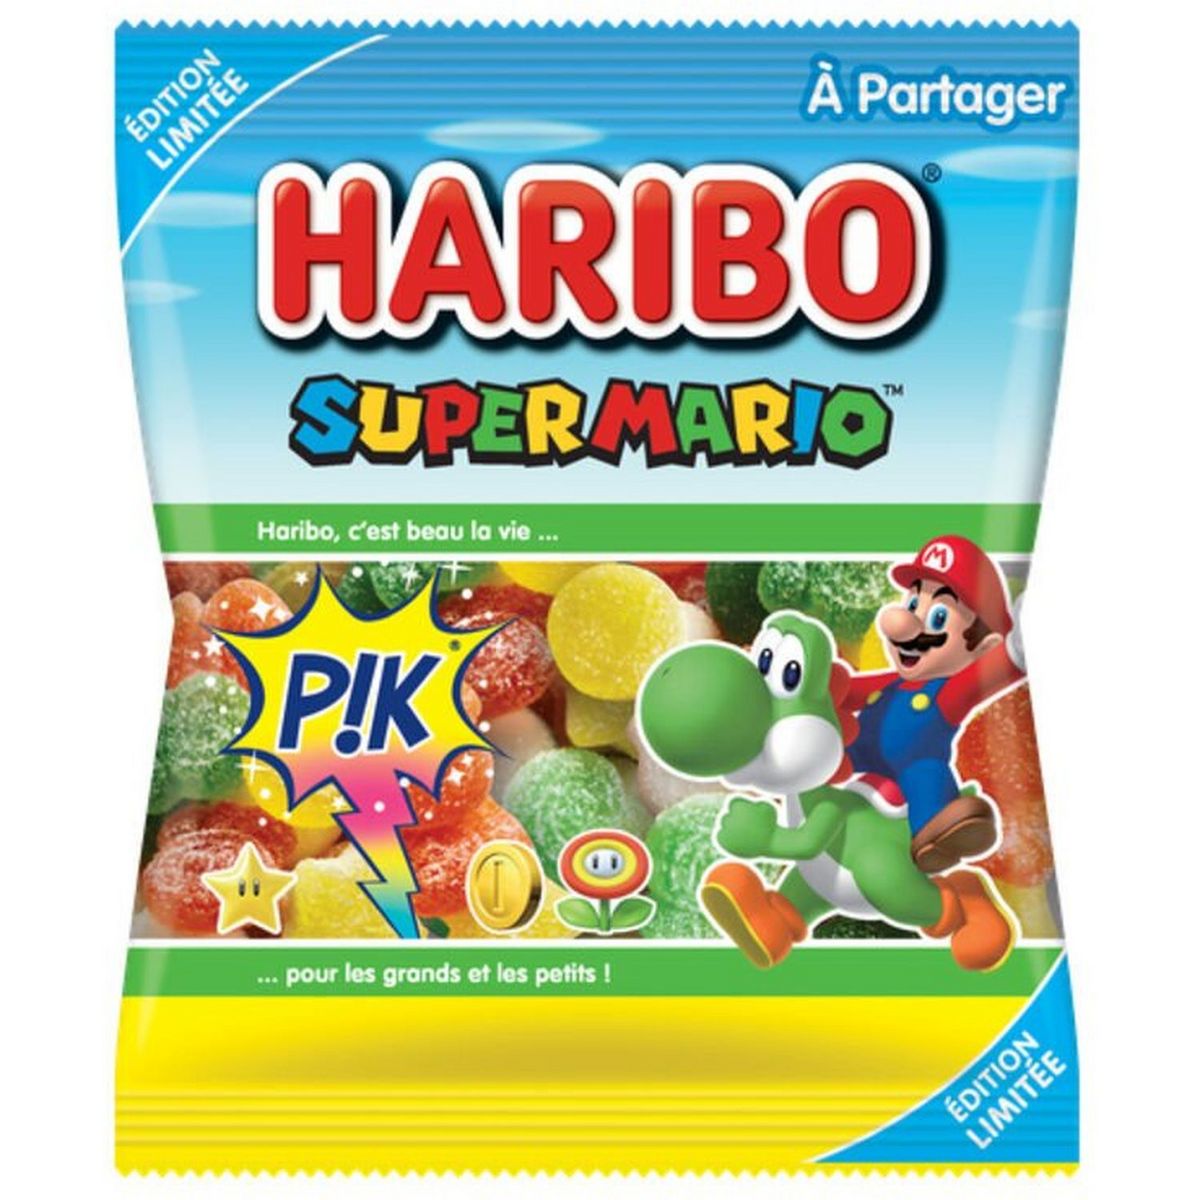 ⇒ Haribo Super Mario PiK • EuropaFoodXB • Buy food online from